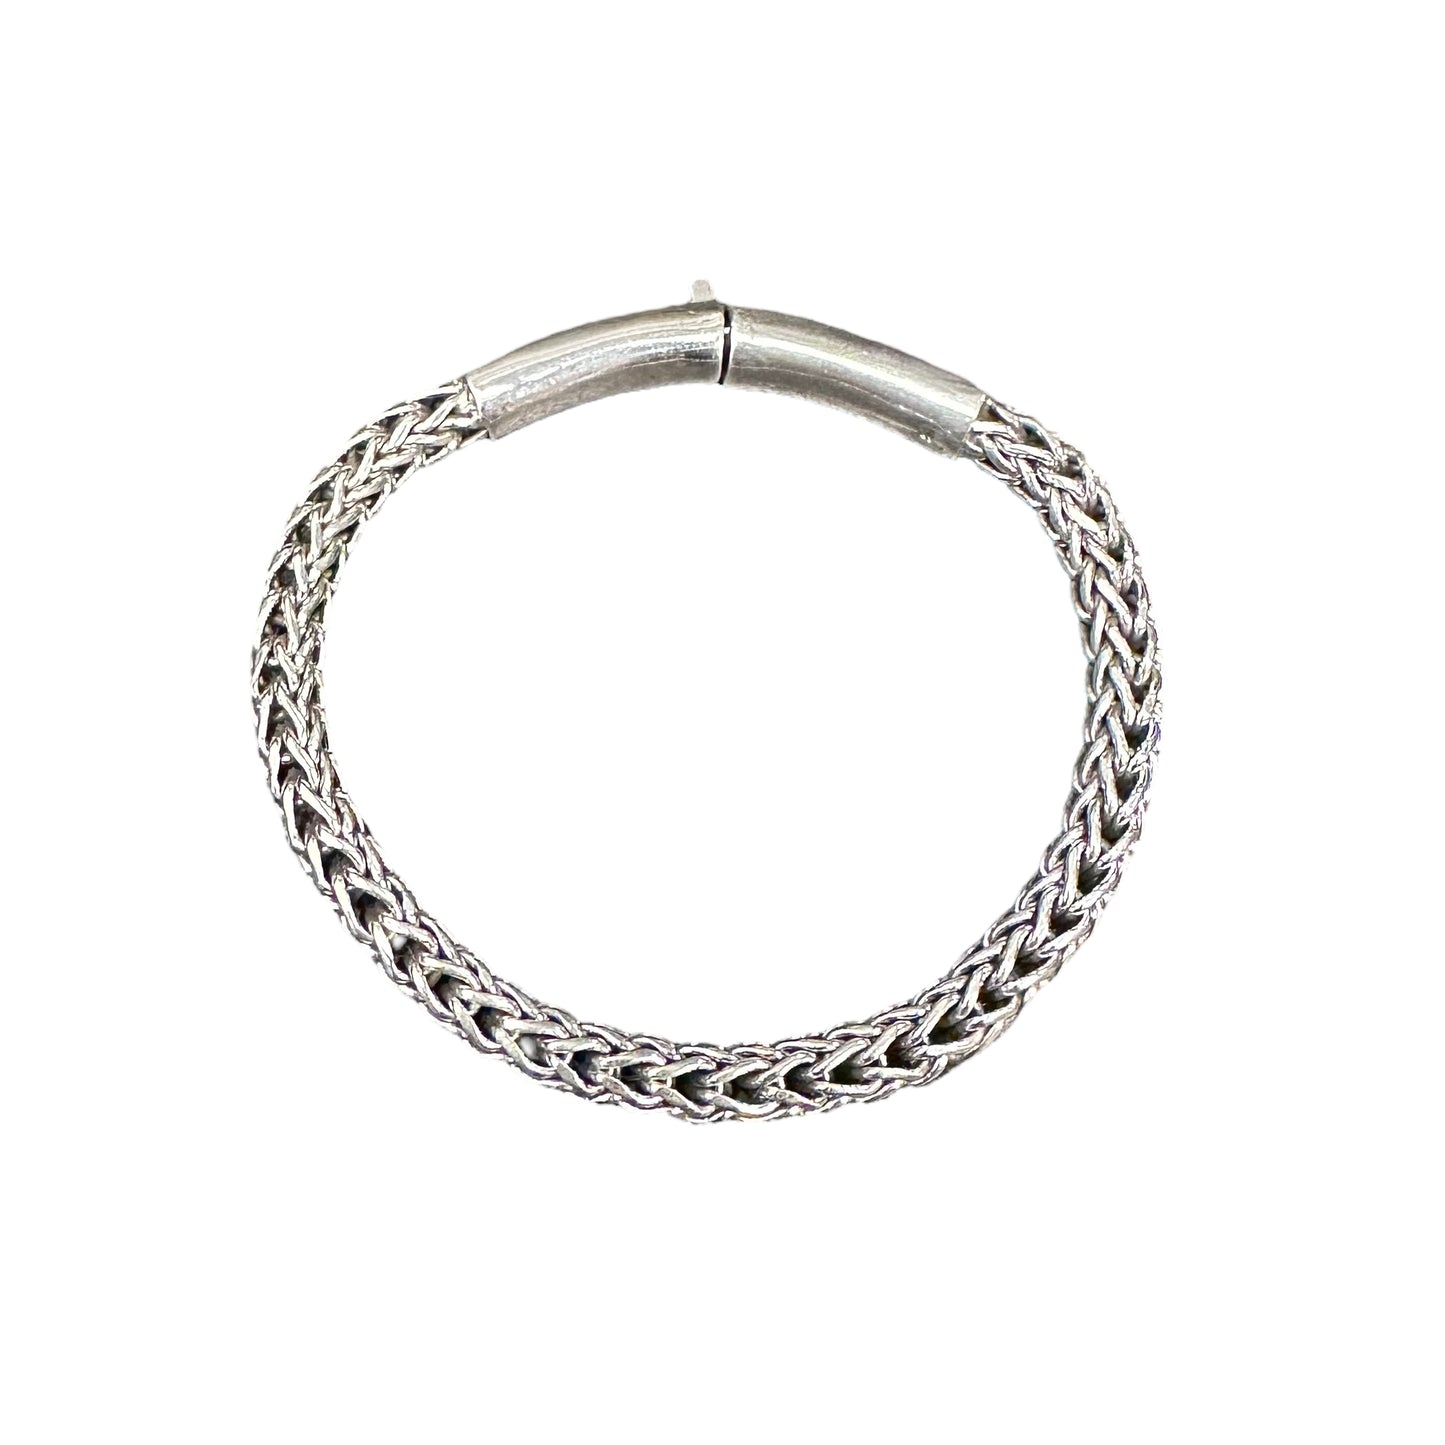 Handmade Bali Foxtail 7mm Sterling Silver Bracelet Chain